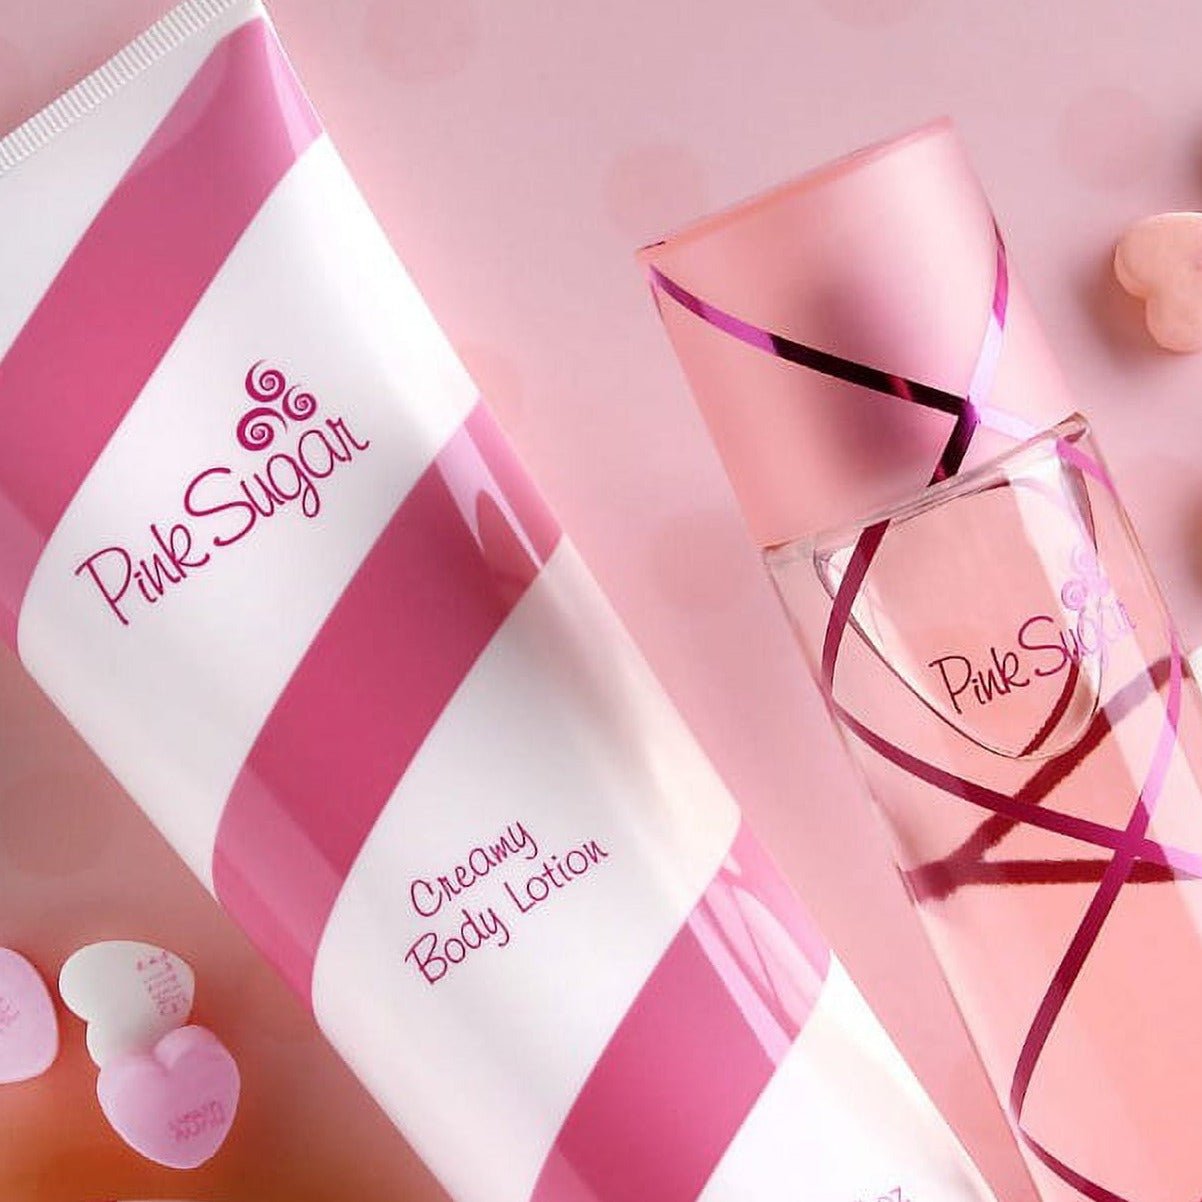 Aquolina Pink Sugar Creamy Body Lotion | My Perfume Shop Australia